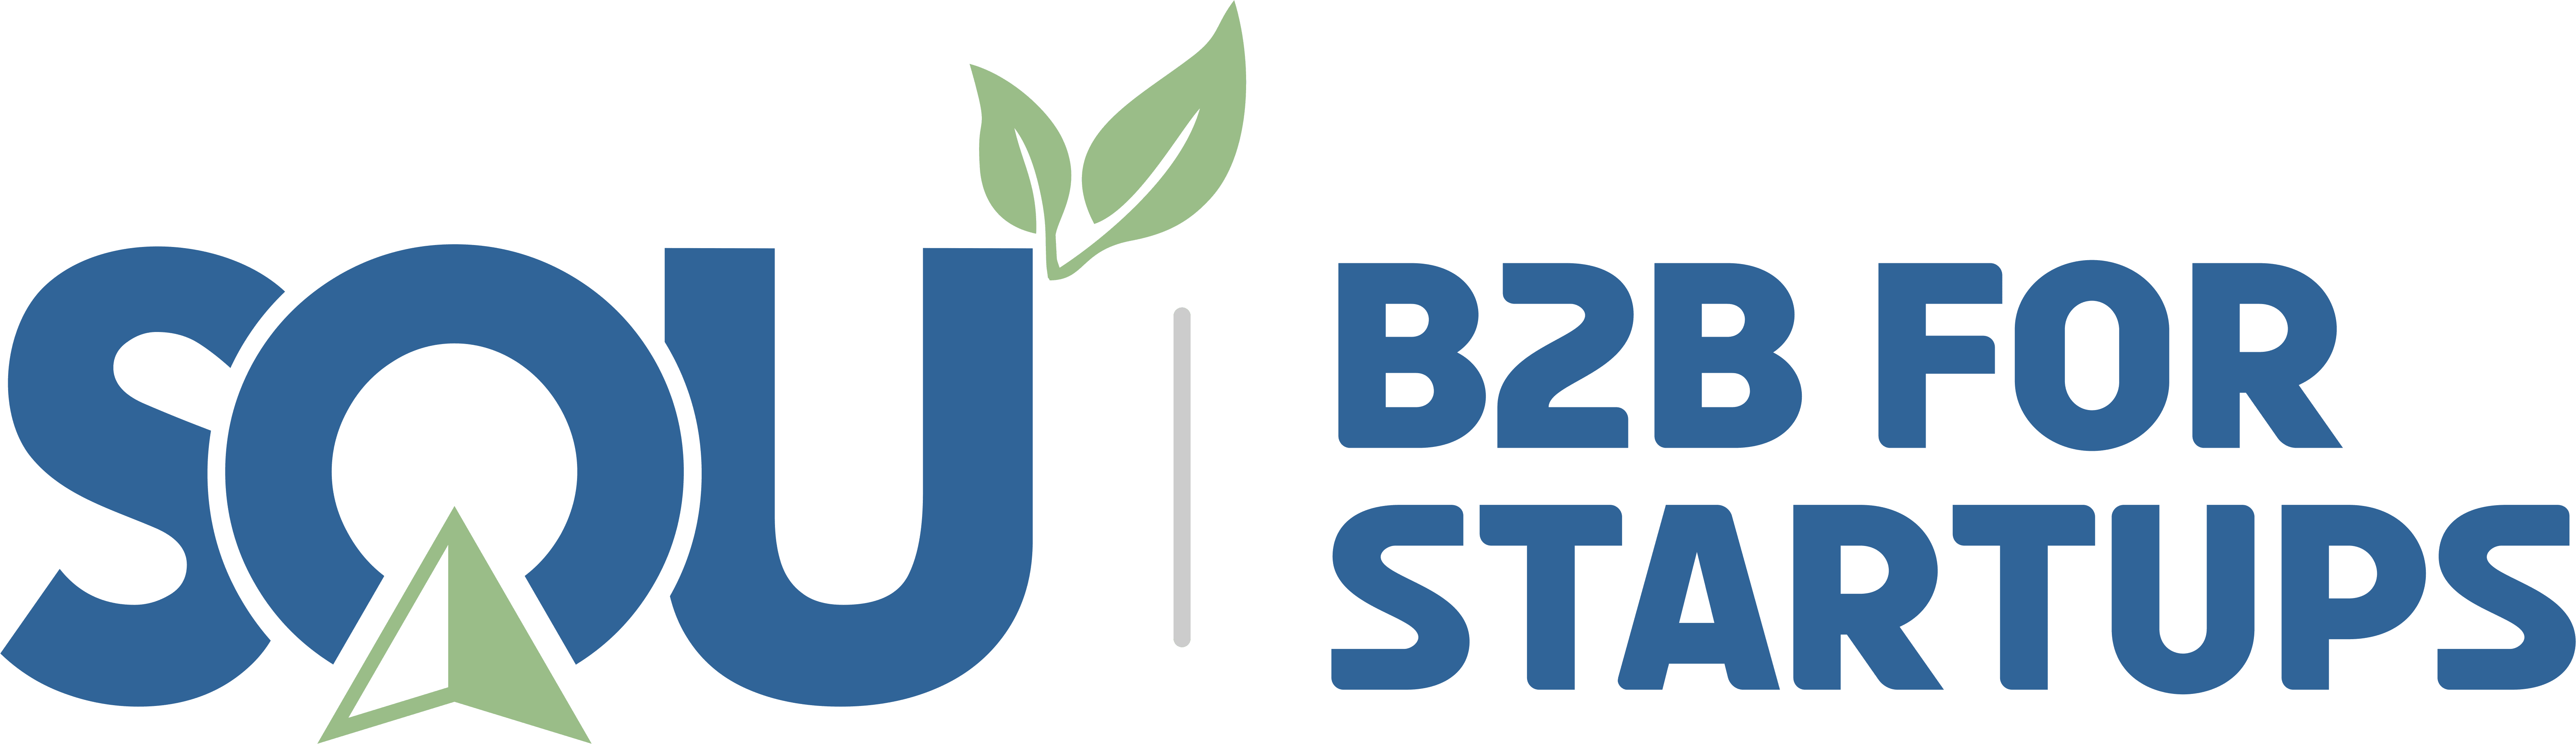 B2B para Startups - SOU Marketing Sustentável